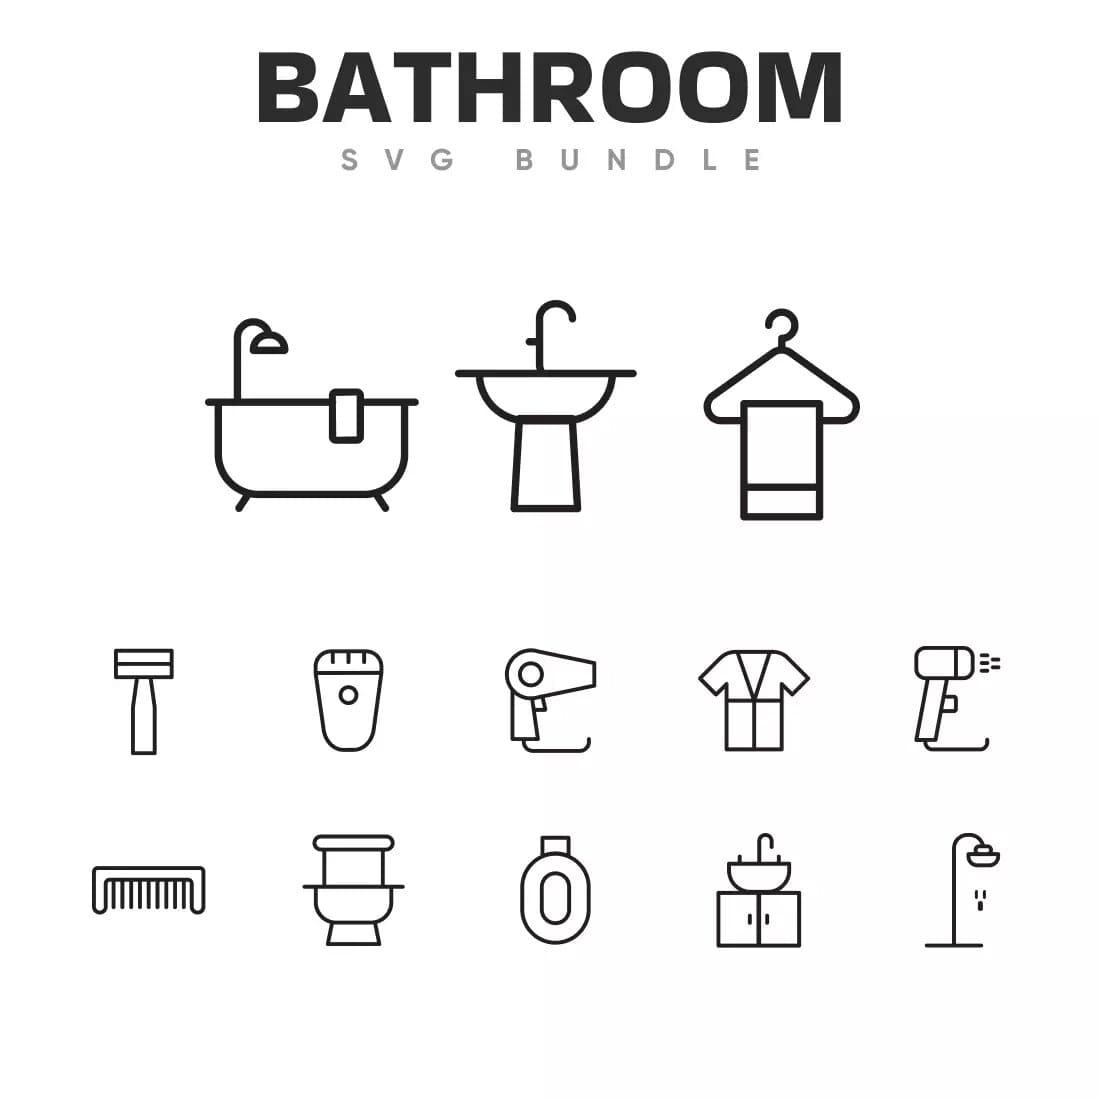 Extensive Bathroom SVG Bundle Preview 4.